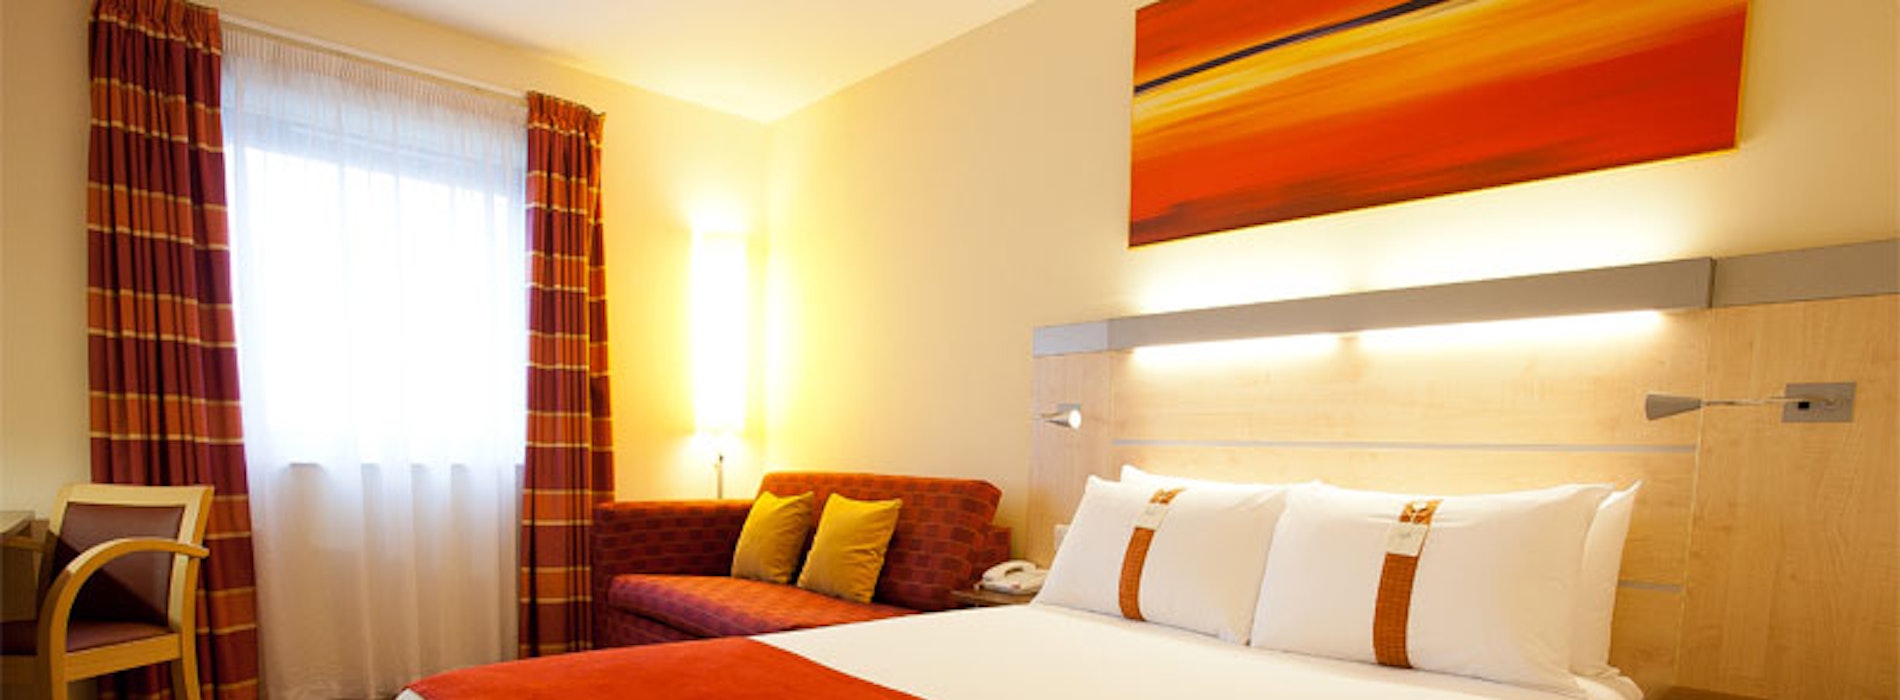 Holiday Inn Express, Slough near LEGOLAND Windsor Resort